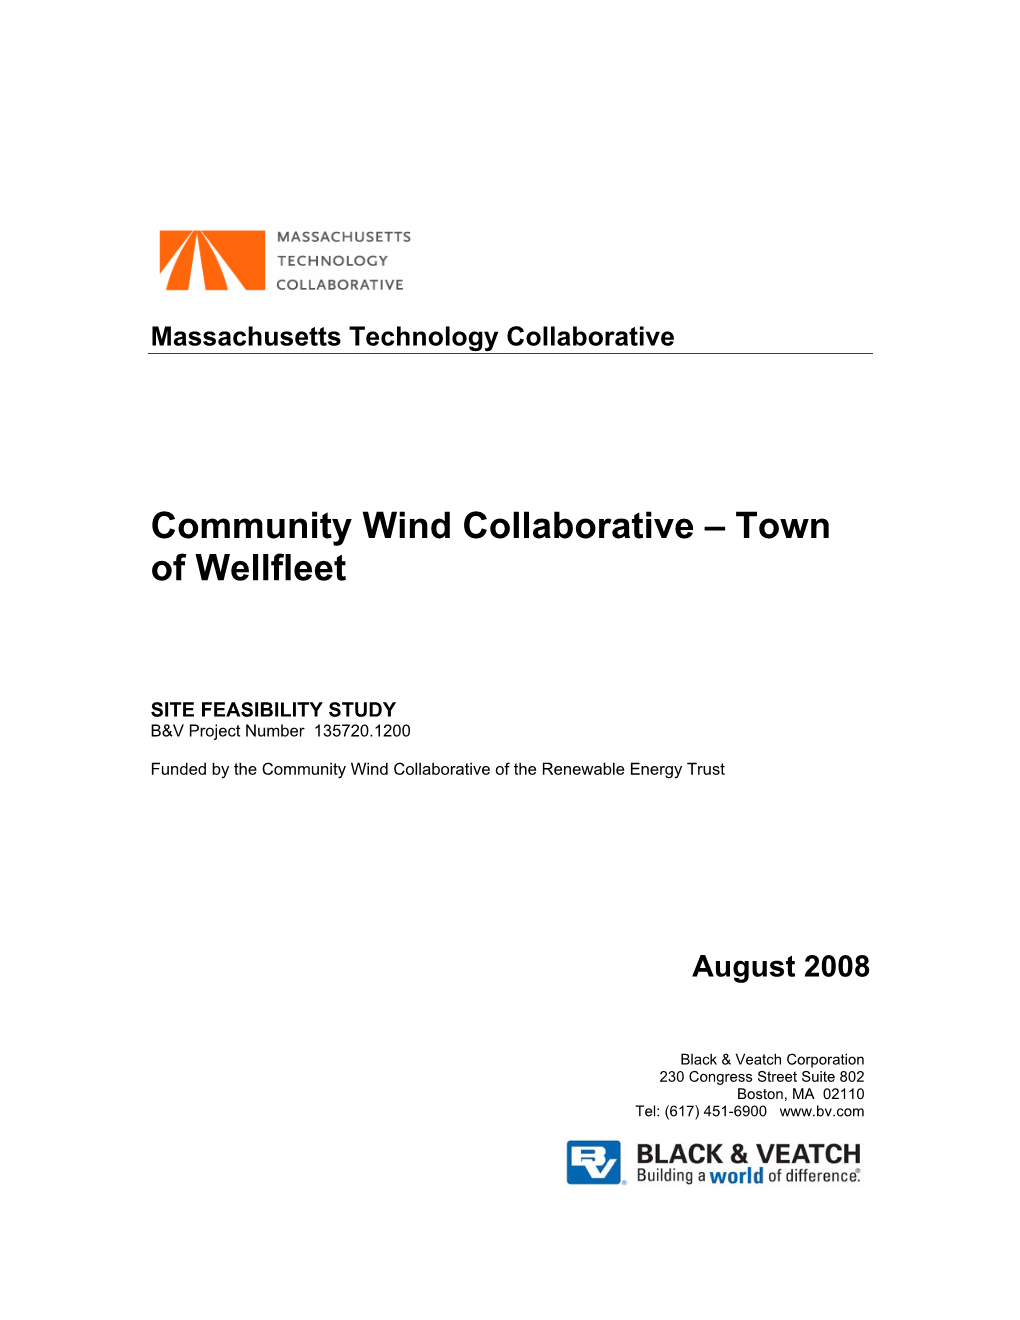 Community Wind Collaborative – Town of Wellfleet